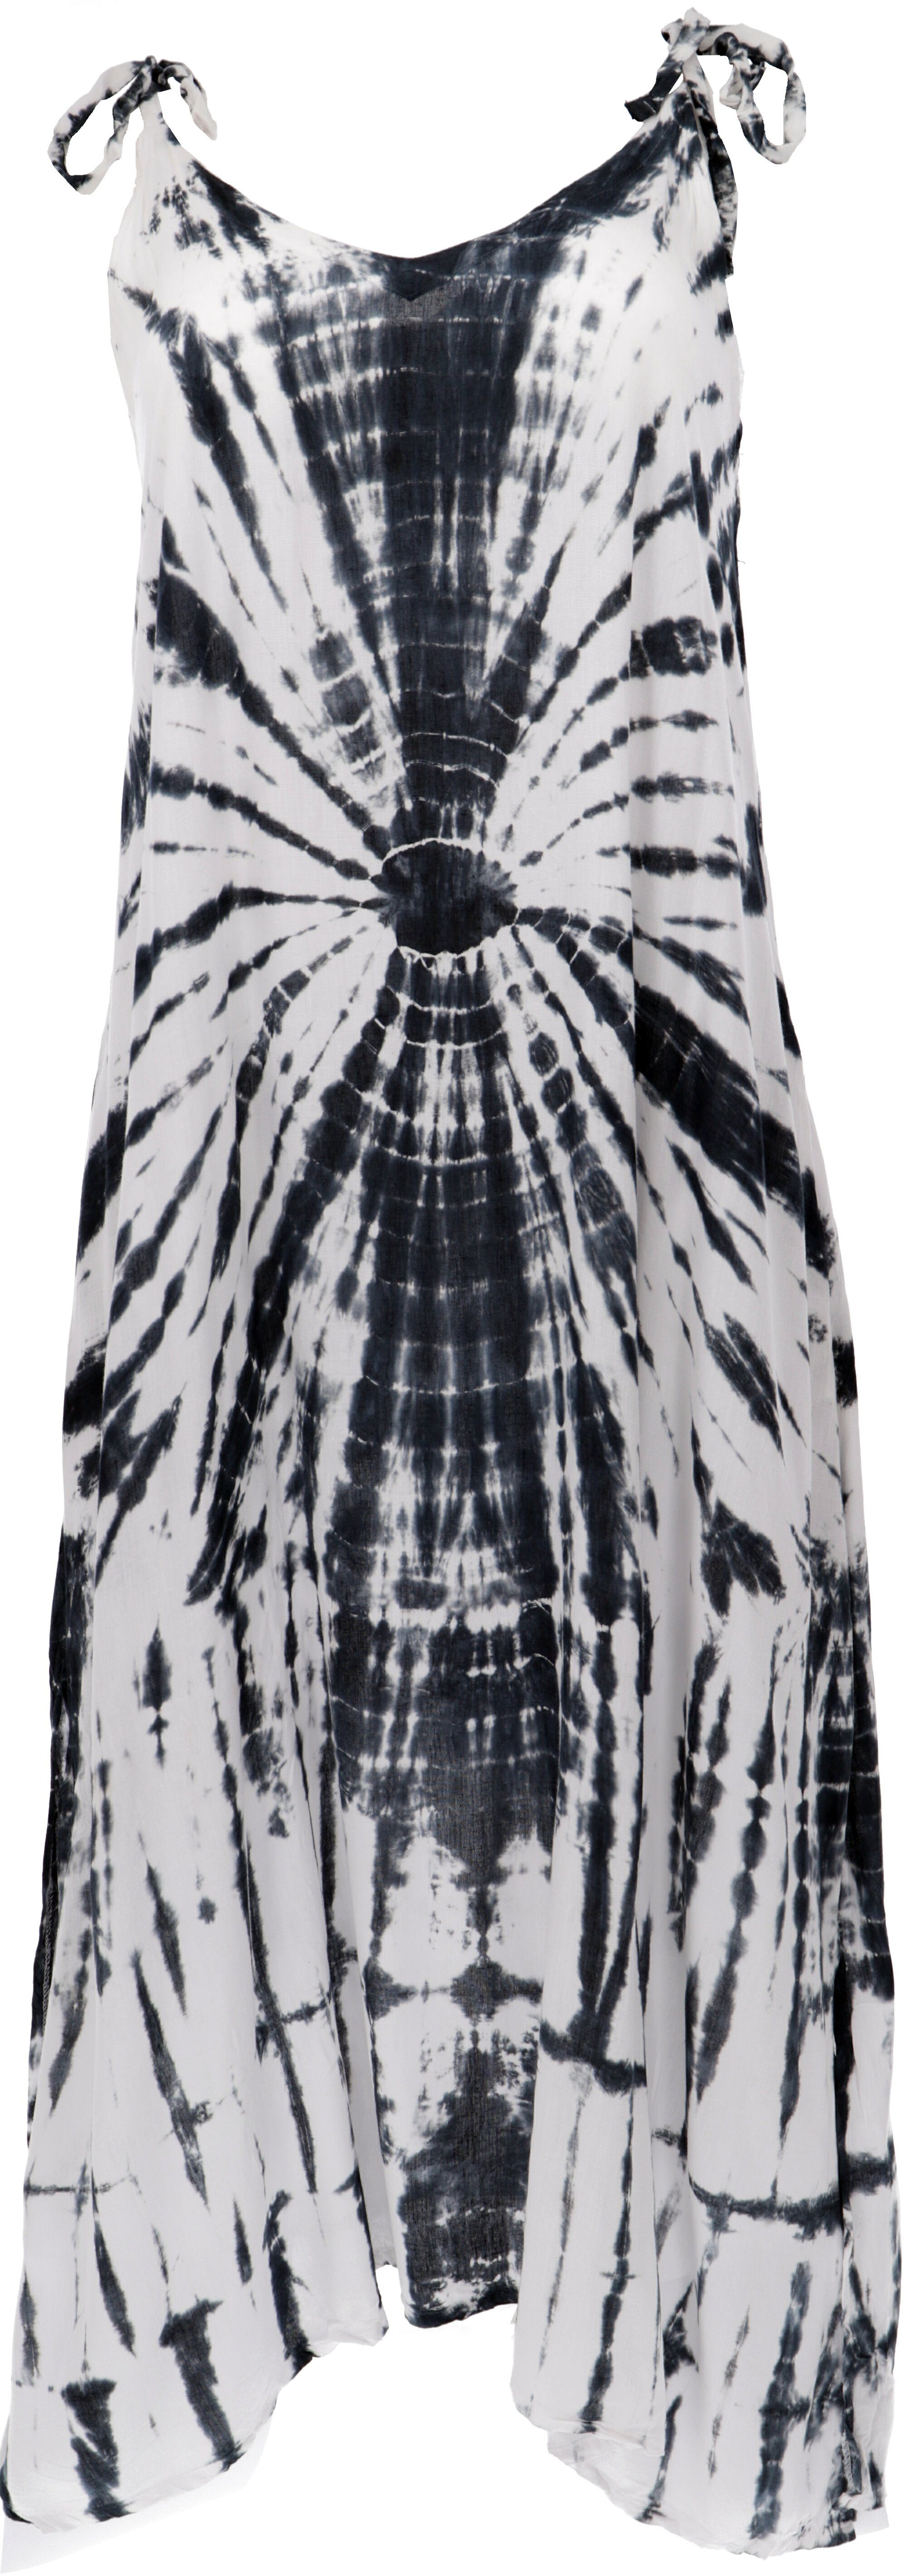 Guru-Shop Midikleid Boho Batikkleid, Strandkleid, Sommerkleid in.. alternative Bekleidung weiß/schwarz